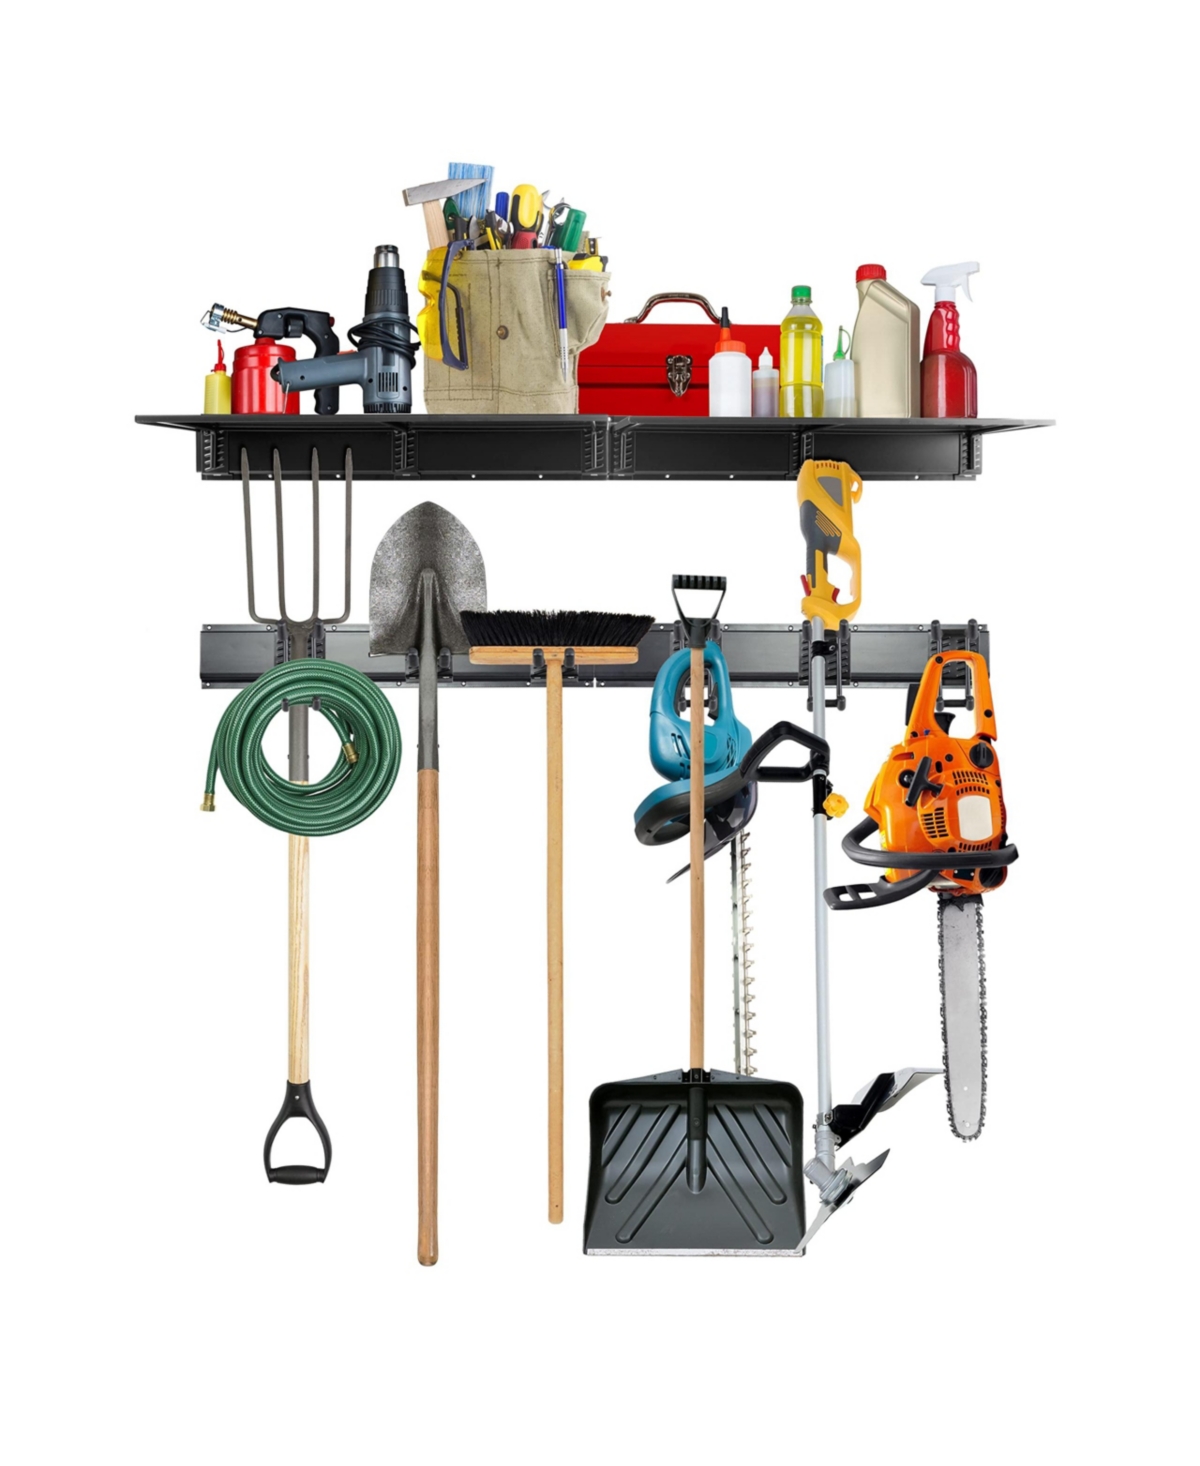 Wall-Mounted Tool Racks with Storage Shelves and Hooks - Black